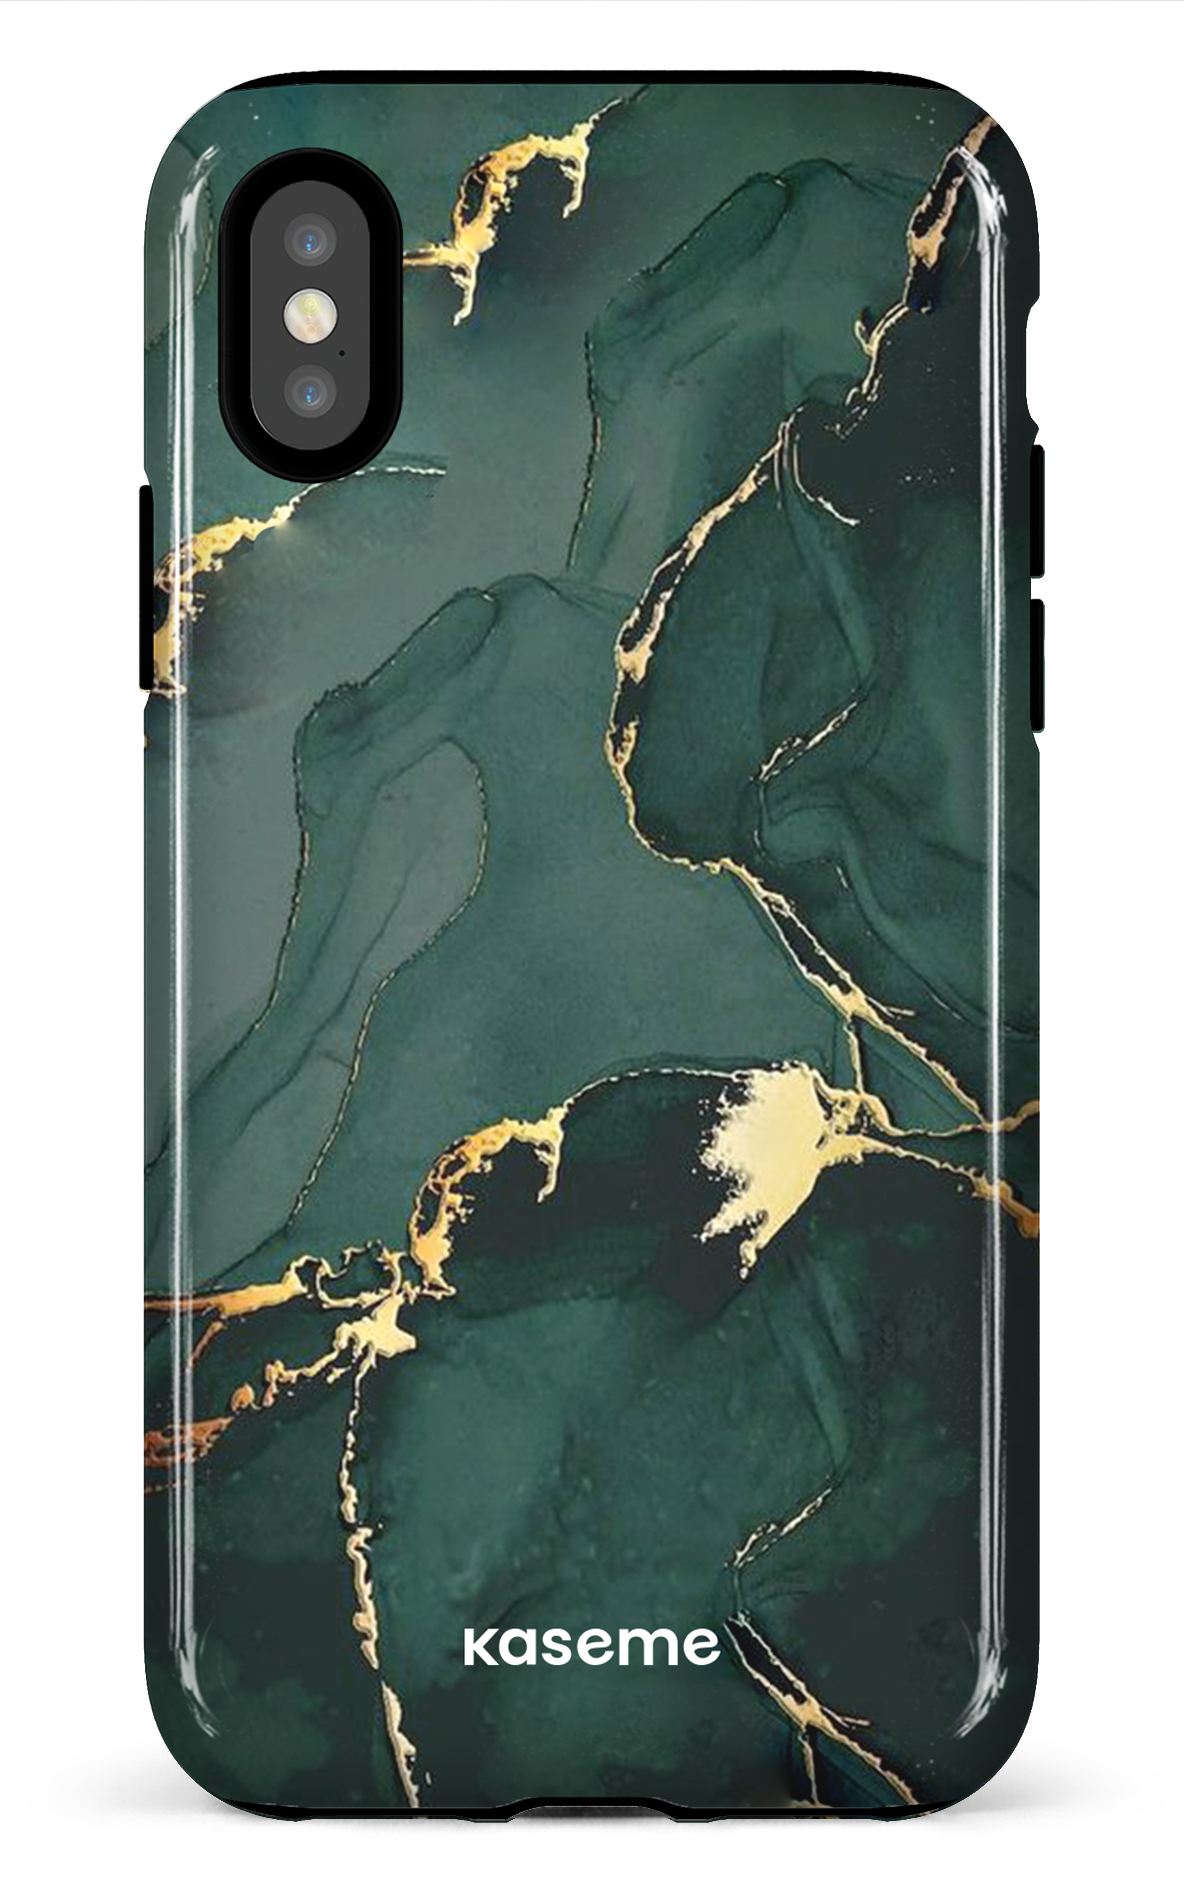 Jade - iPhone X/XS